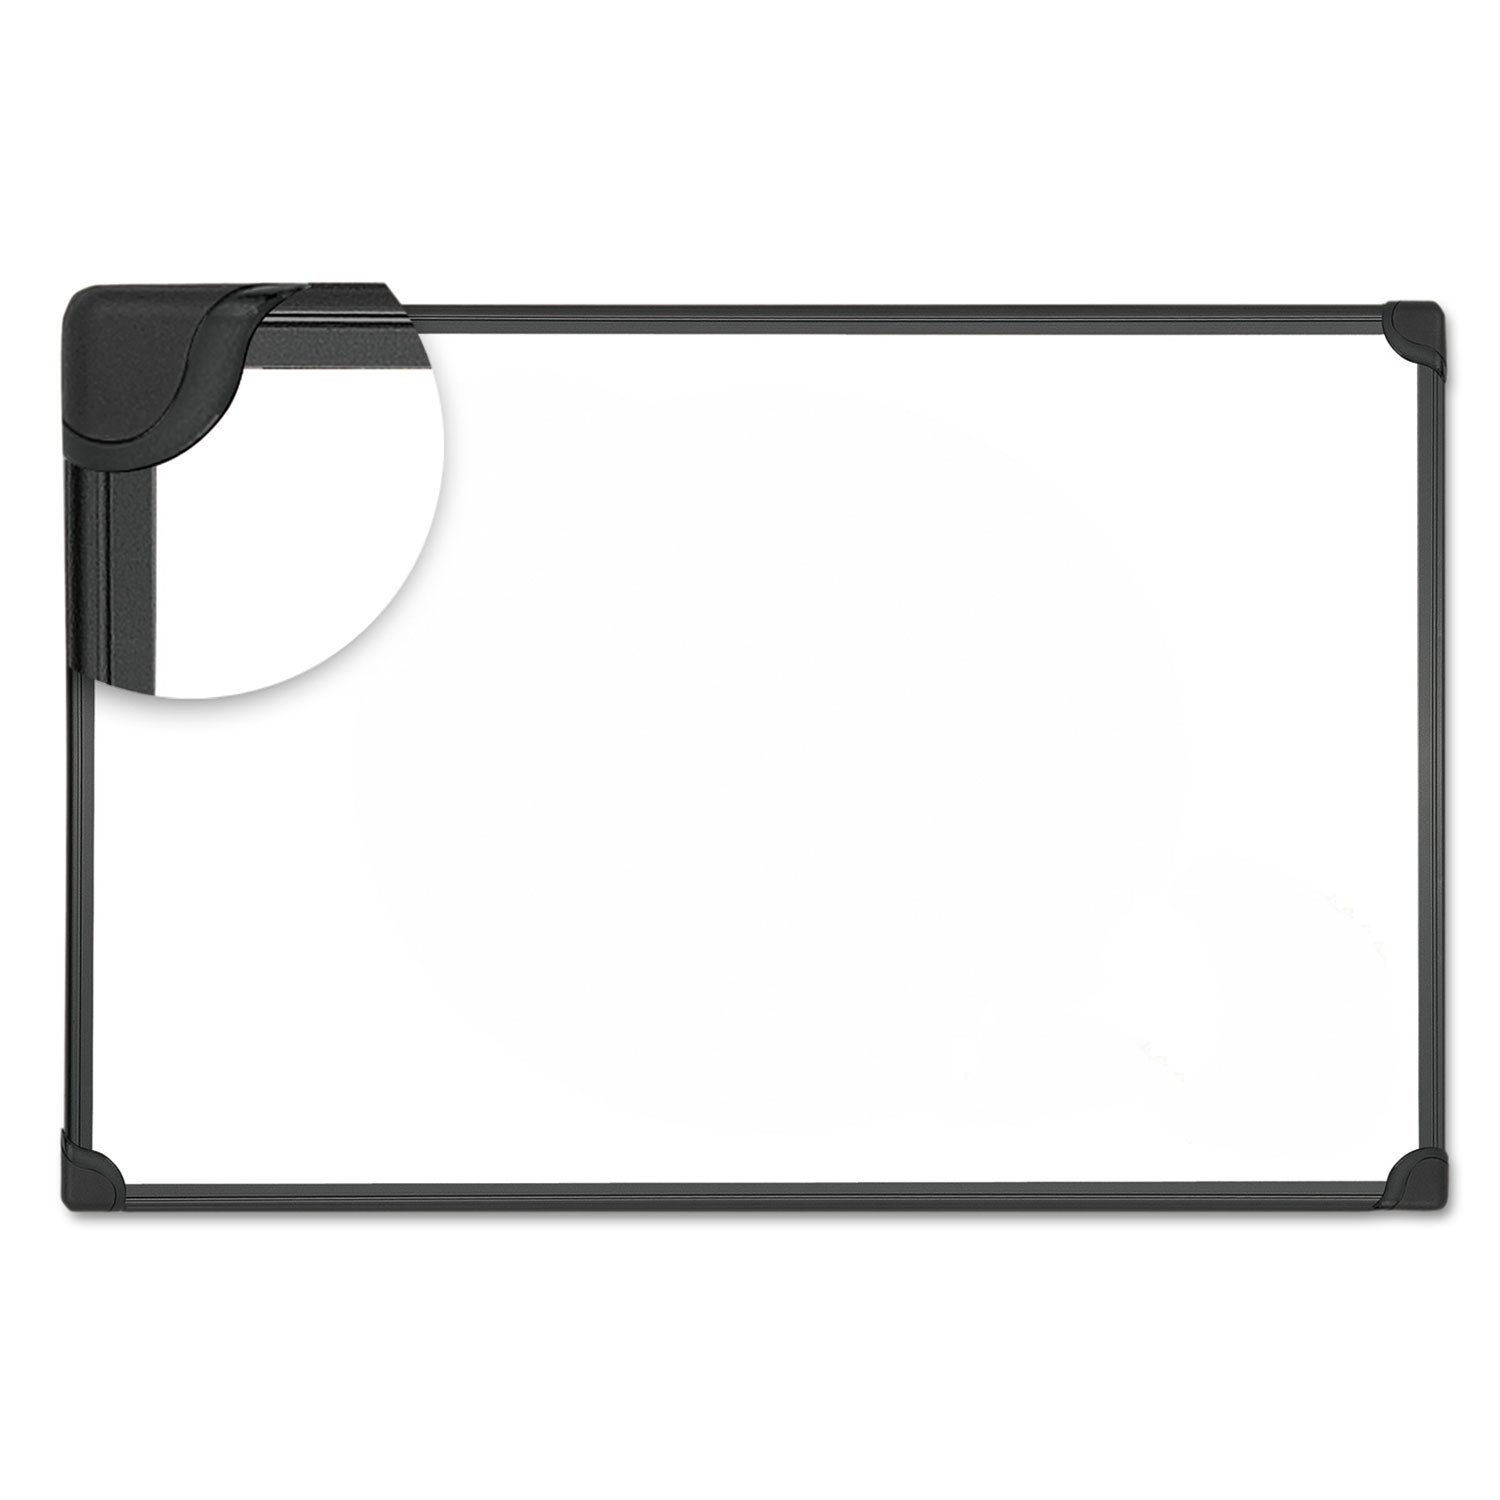  Universal UNV43026 Design Series Magnetic Steel Dry Erase Board, 48 x 36, White, Black Frame (UNV43026) 